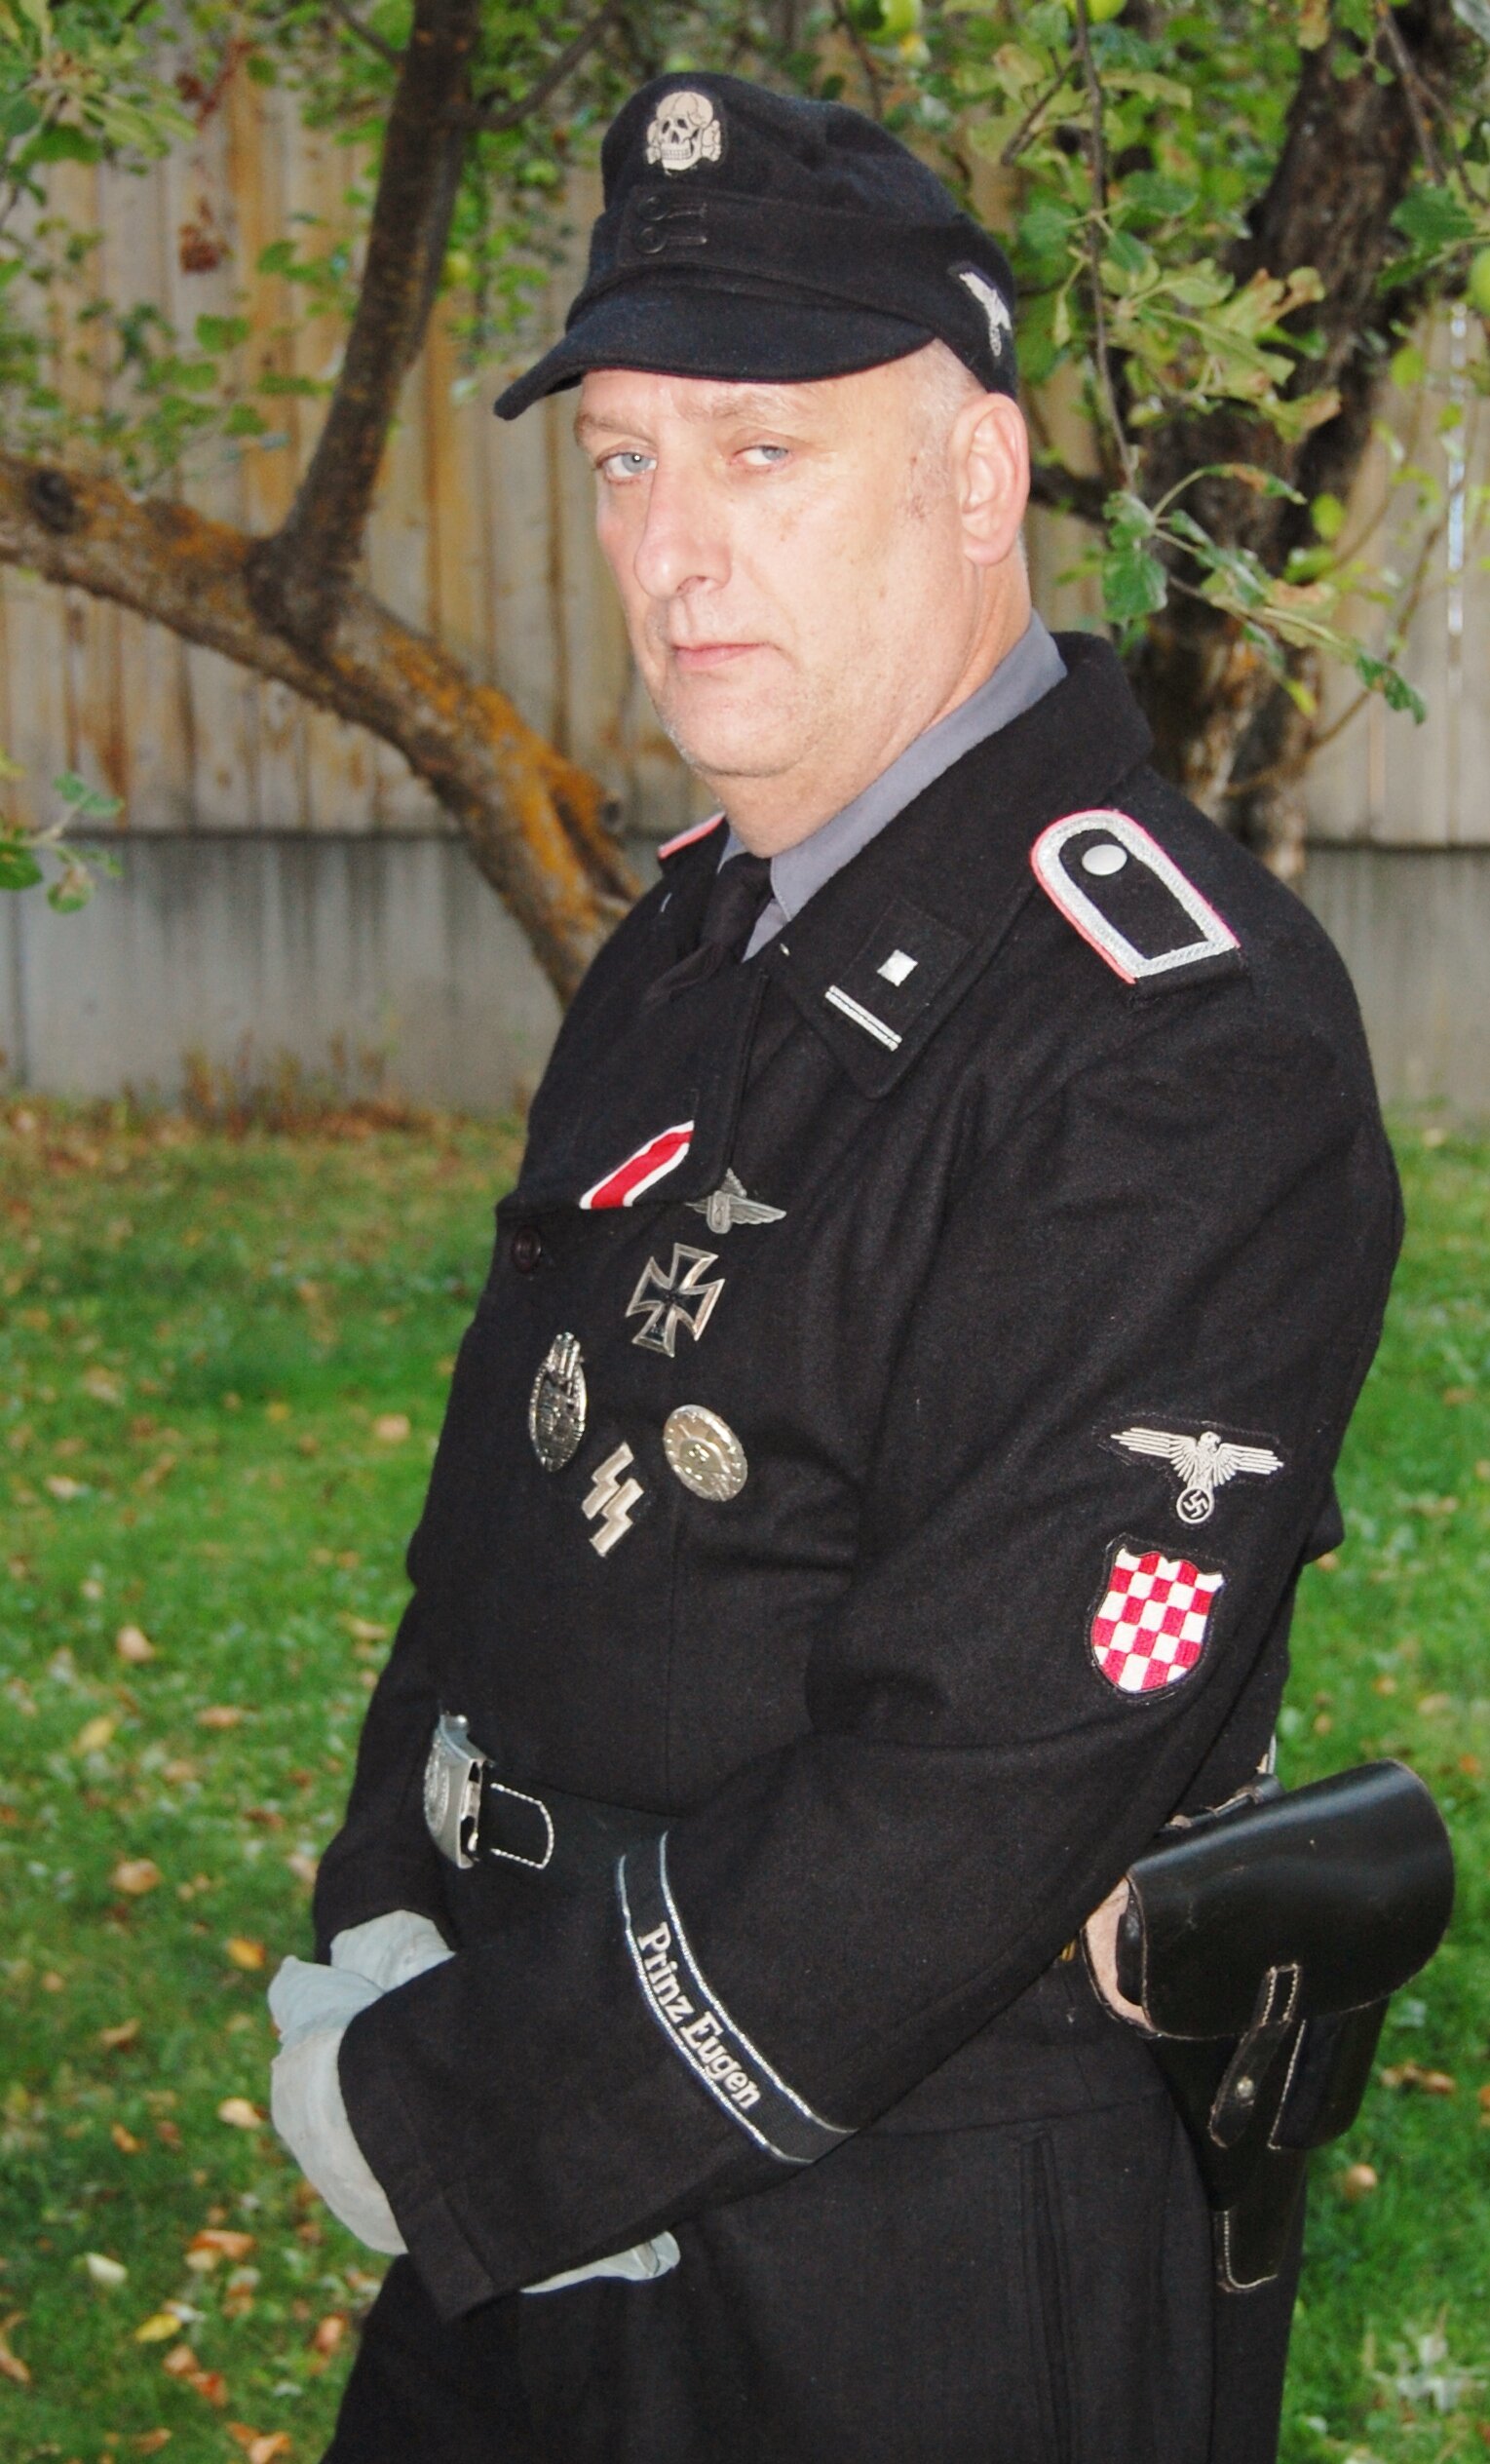 Prinz Eugan Pz. Officer (56).JPG